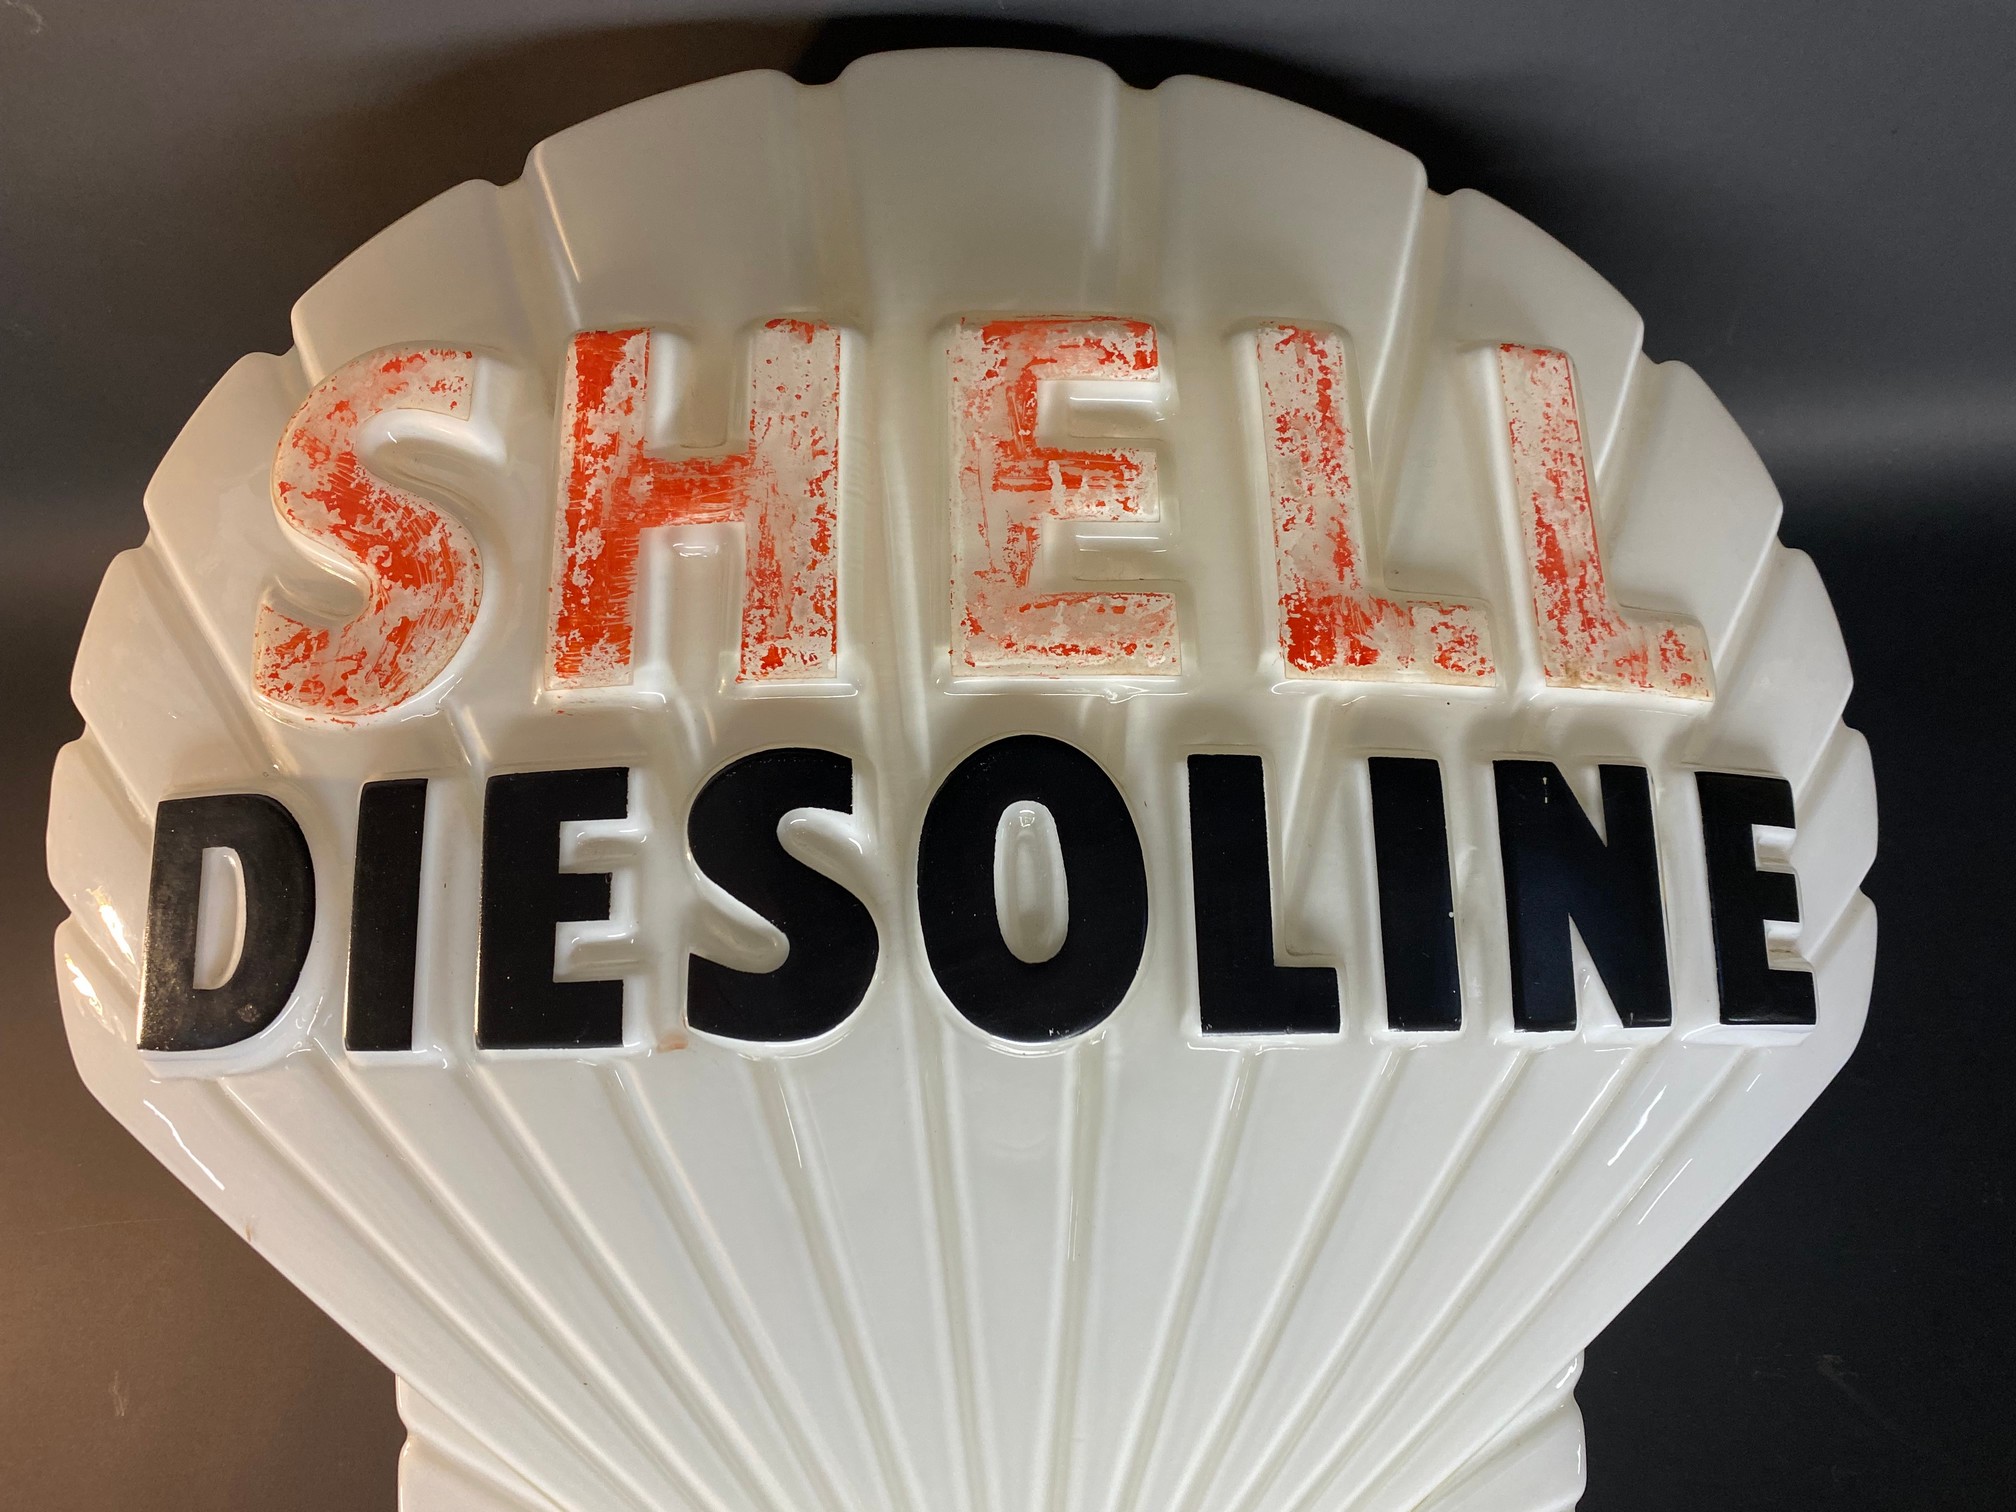 A Shell Diesoline glass petrol pump globe by Hailware, chip to bottom corner. - Image 3 of 5